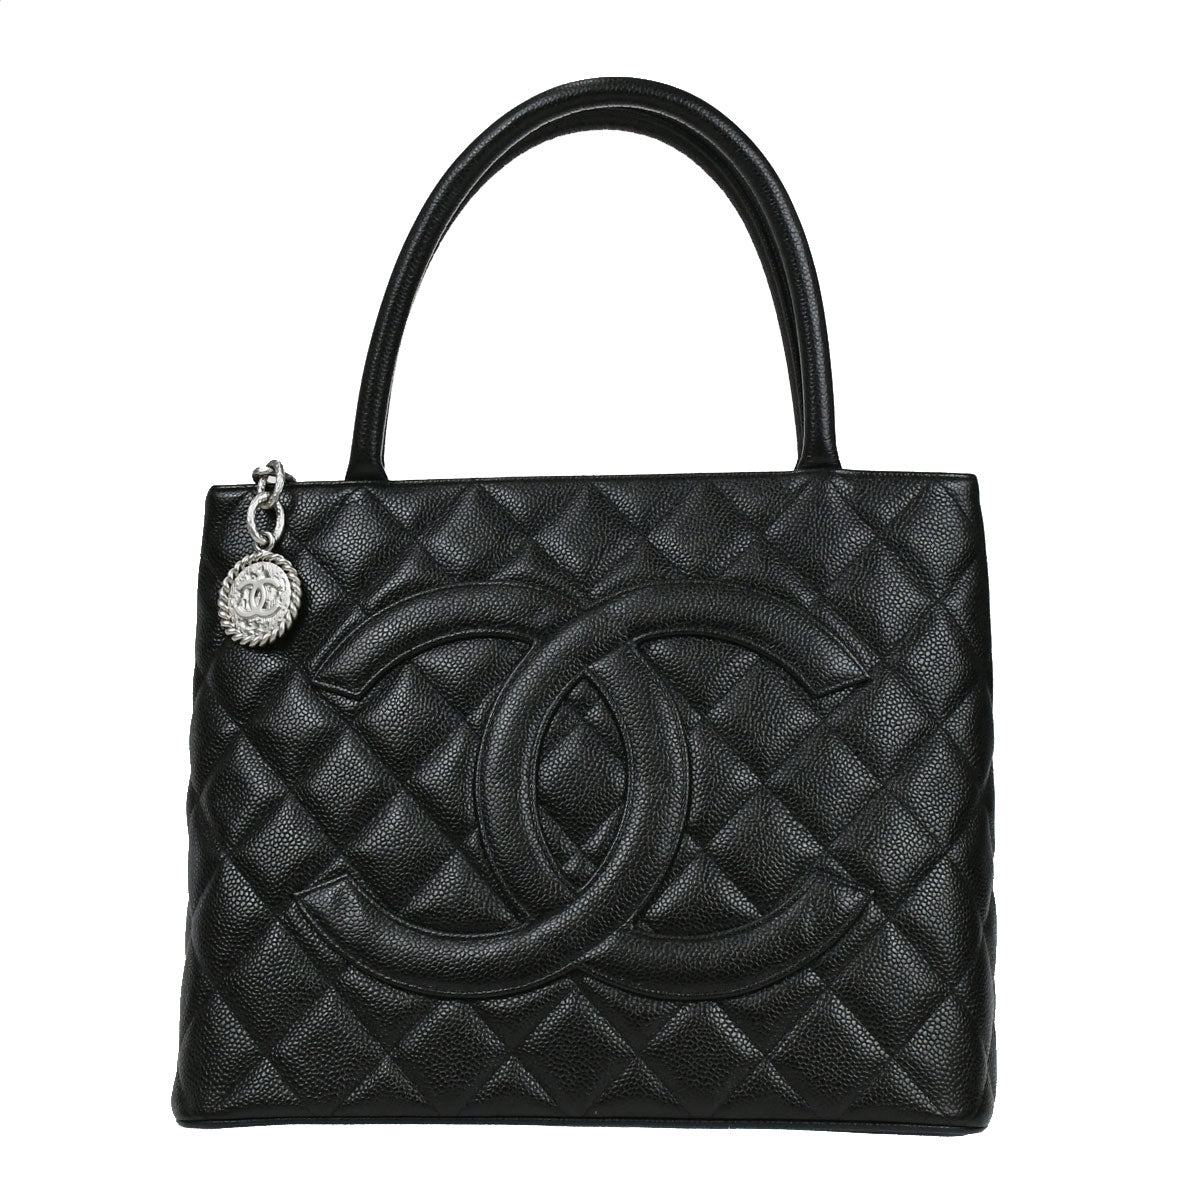 New Chanel Purses | Chanel purse, Bags, Chanel bag